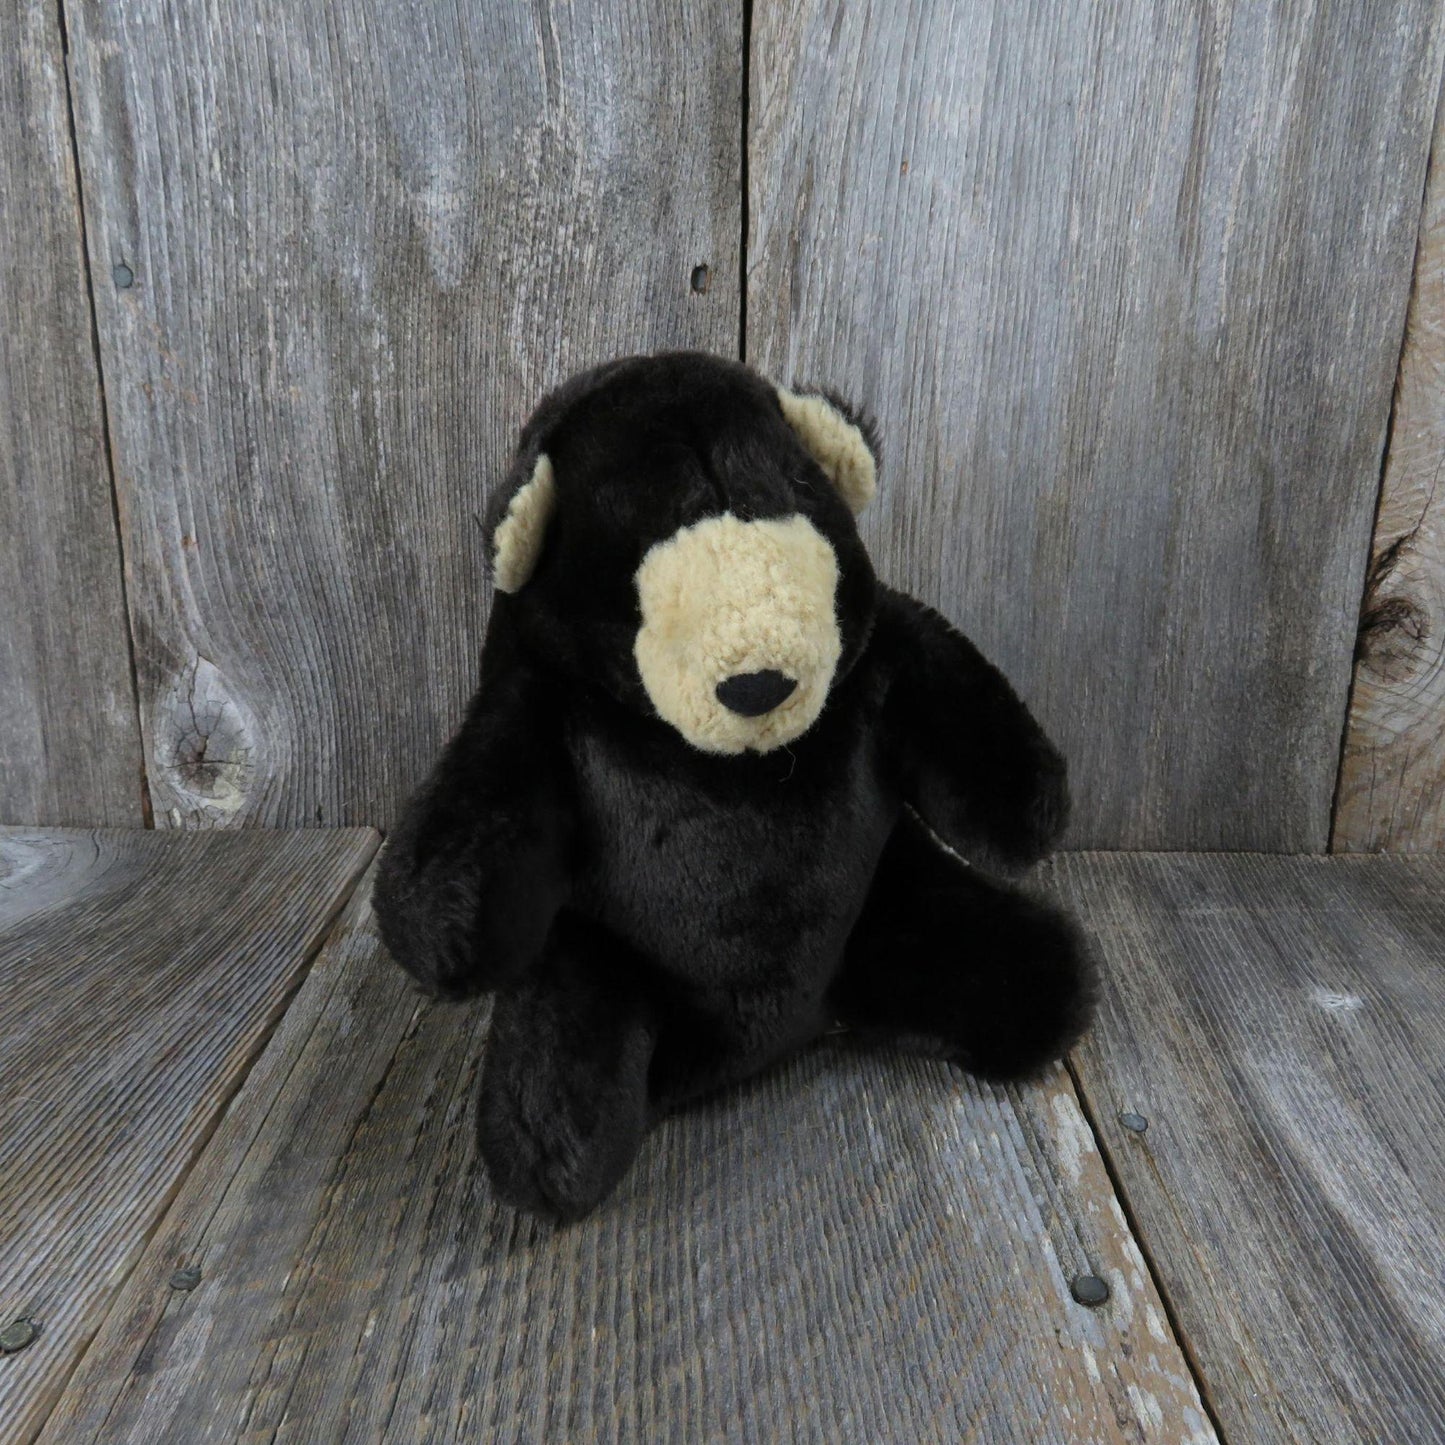 Vintage Black Bear Stuffed Animal Dakin Pillow Pets 1982 8 Inch Plush Clippings Pellet